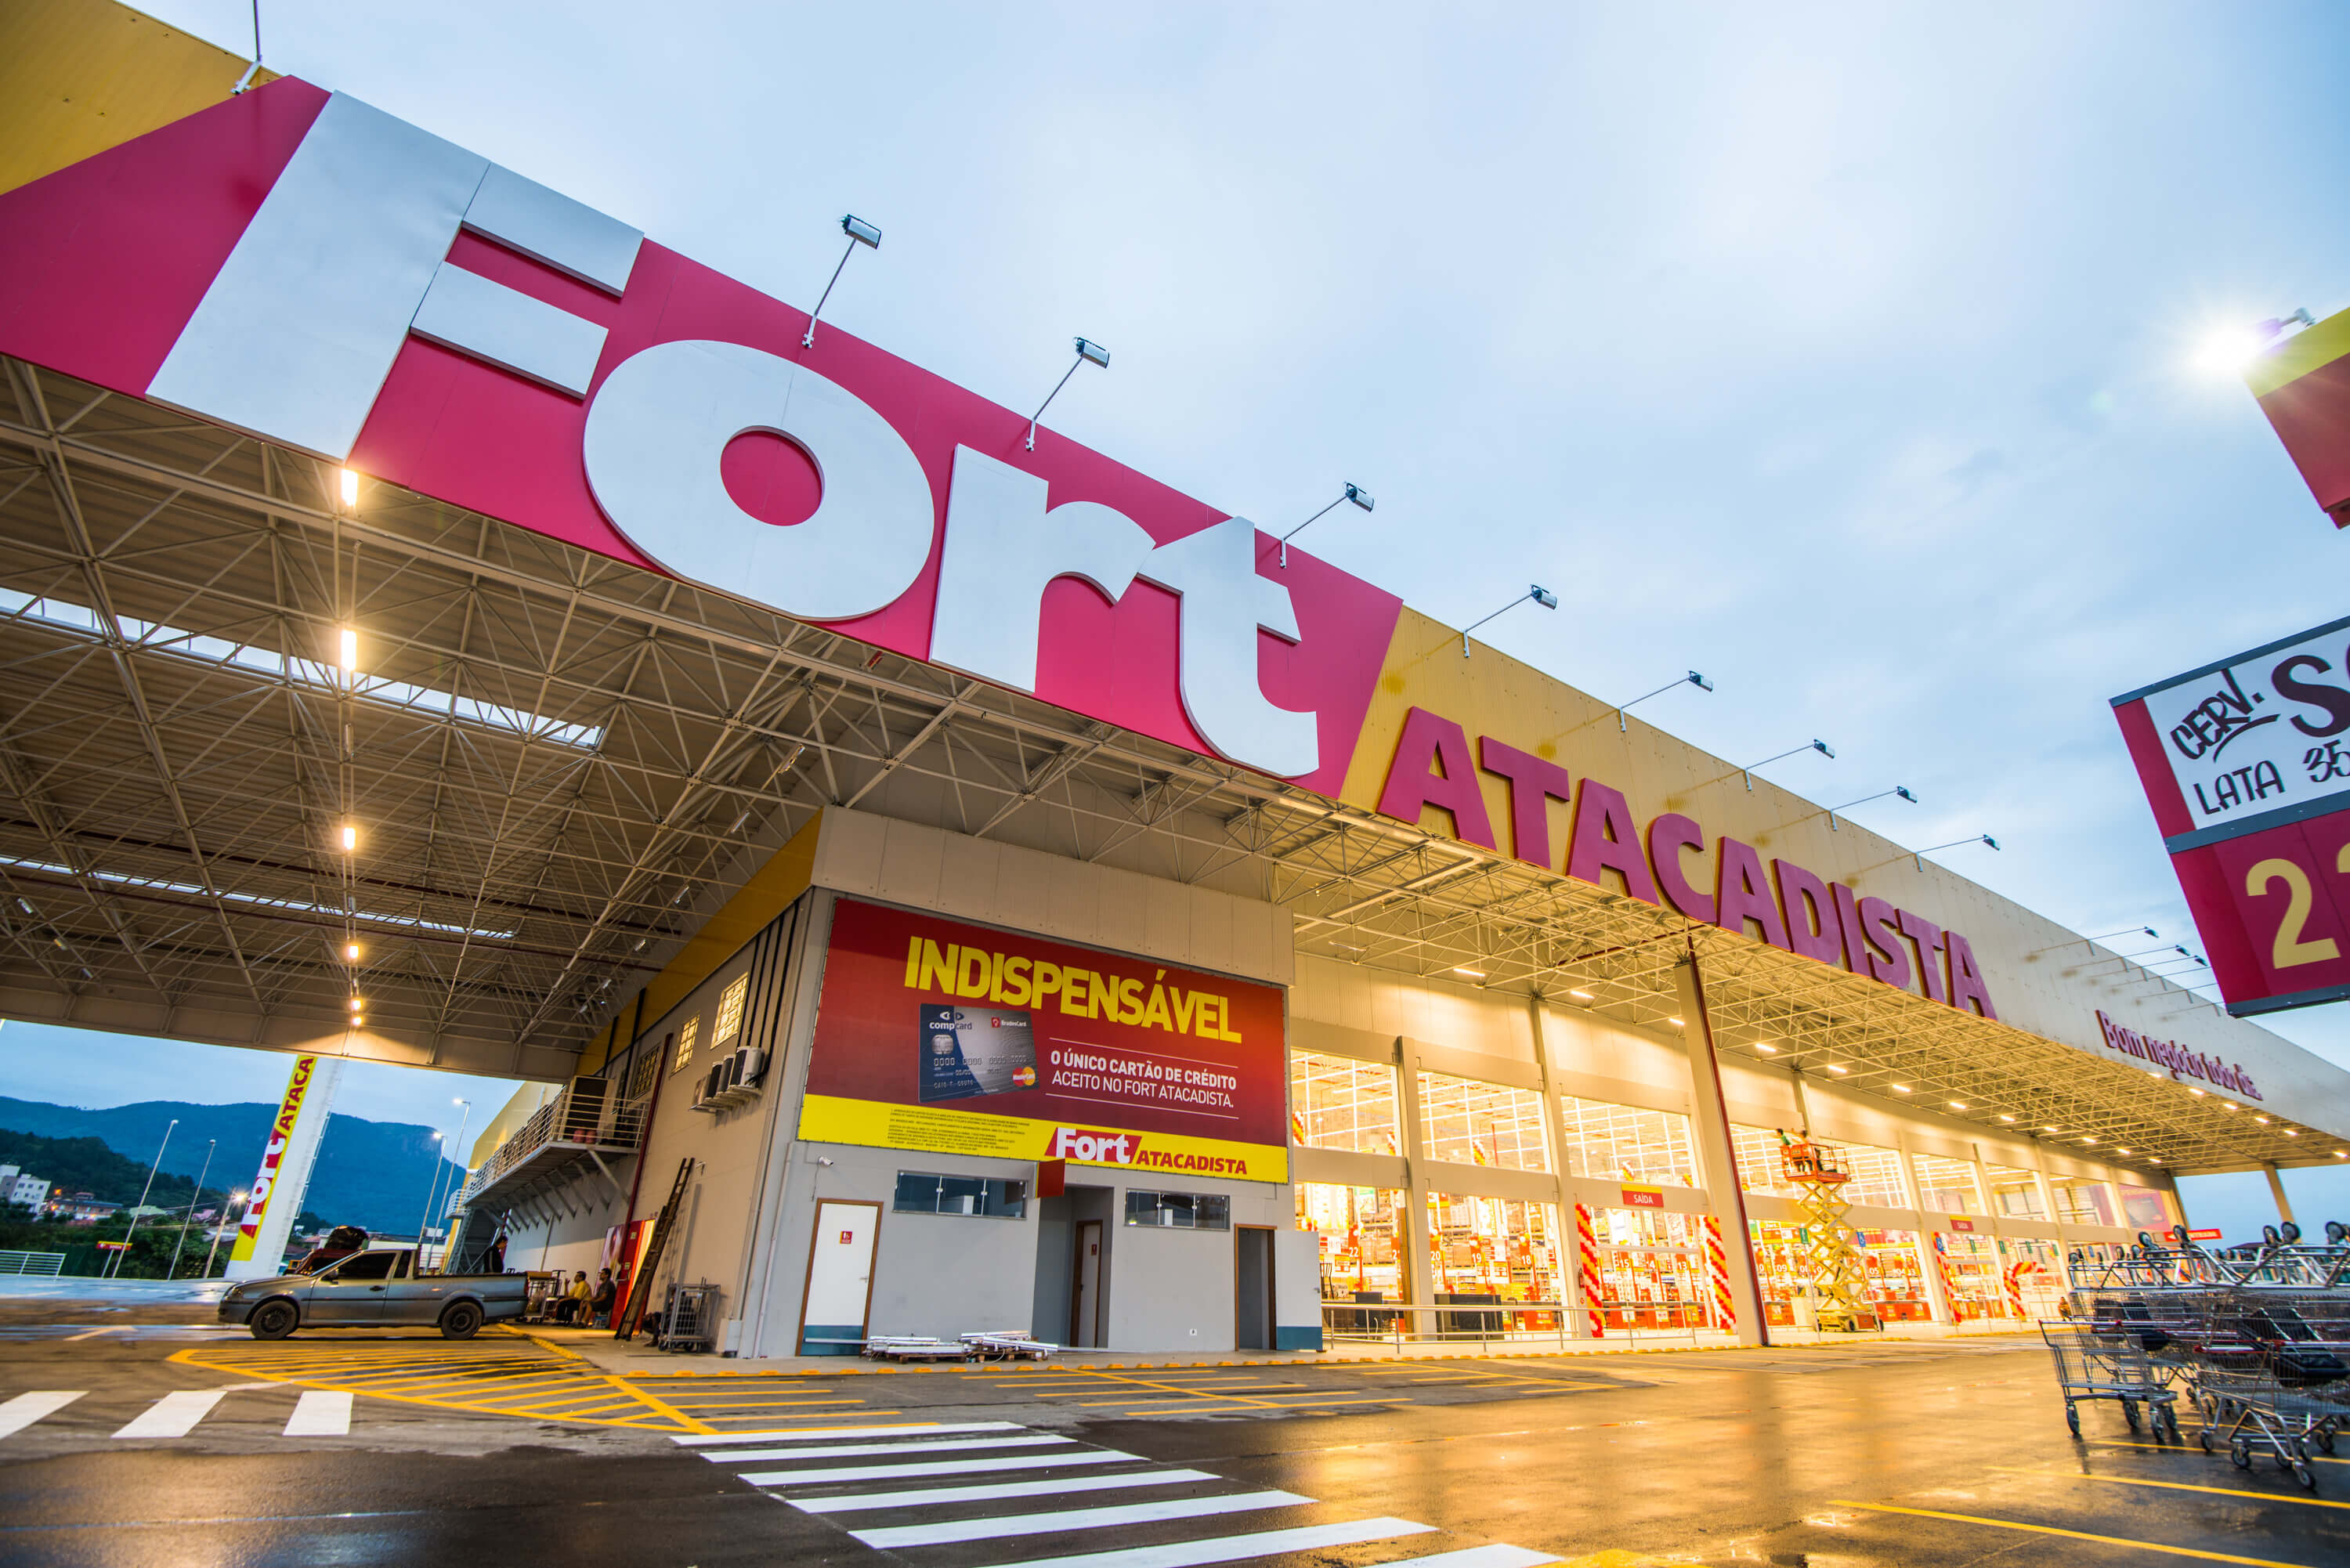 Fort Atacadista vendia produtos impróprios para consumo